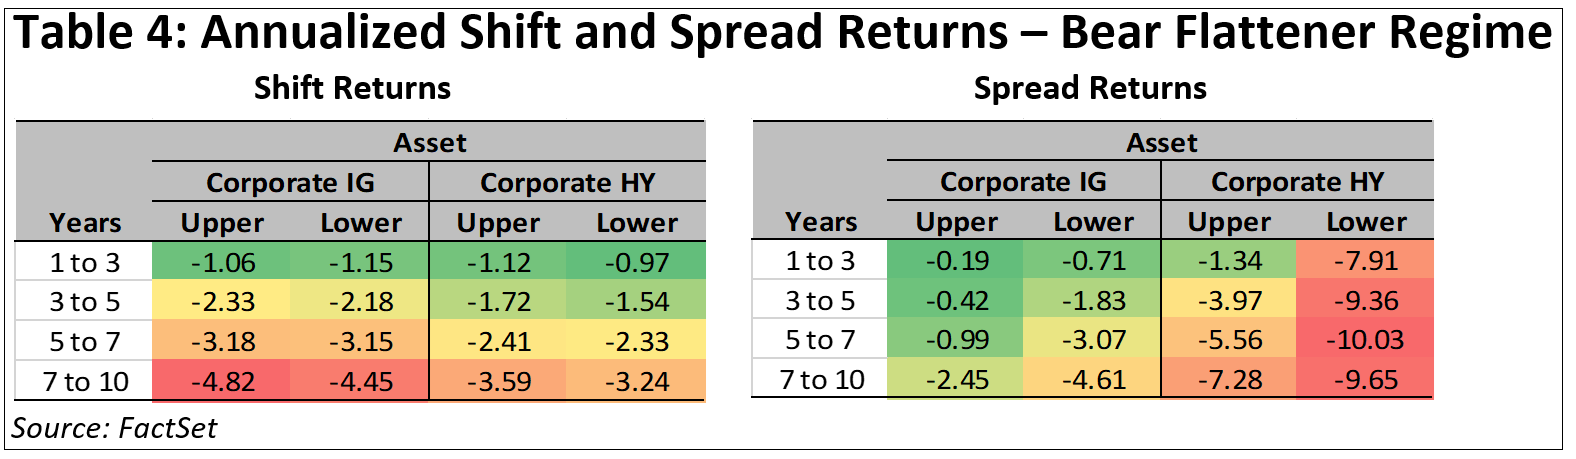 annualized-shift-and-spread-returns-bear-flattener-regime